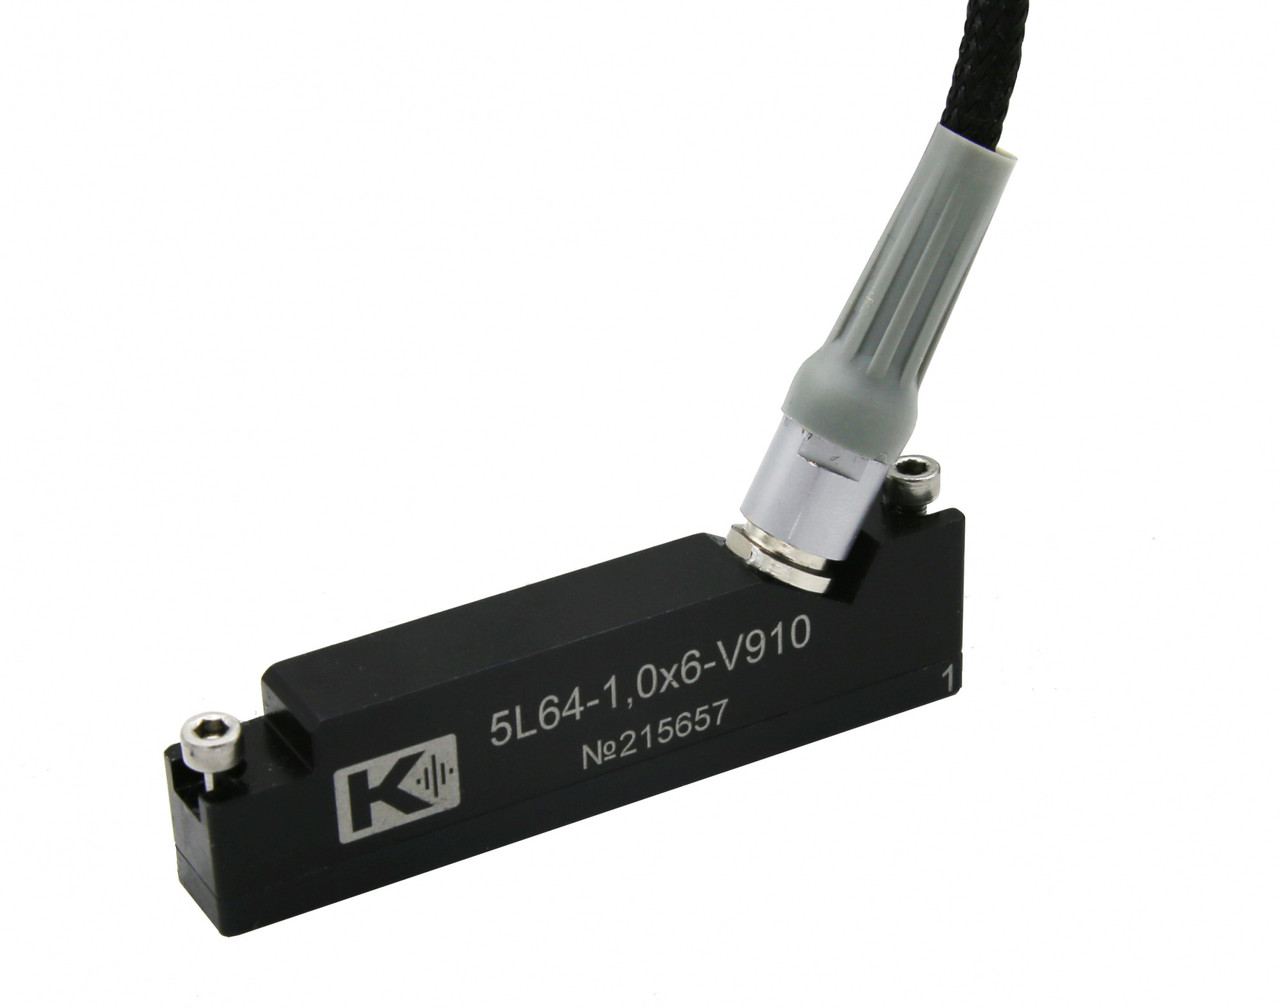 5L64-1,0х6-V910 фазированная решетка, 64 эл, 5 МГц, кабель 2м, Amphnol